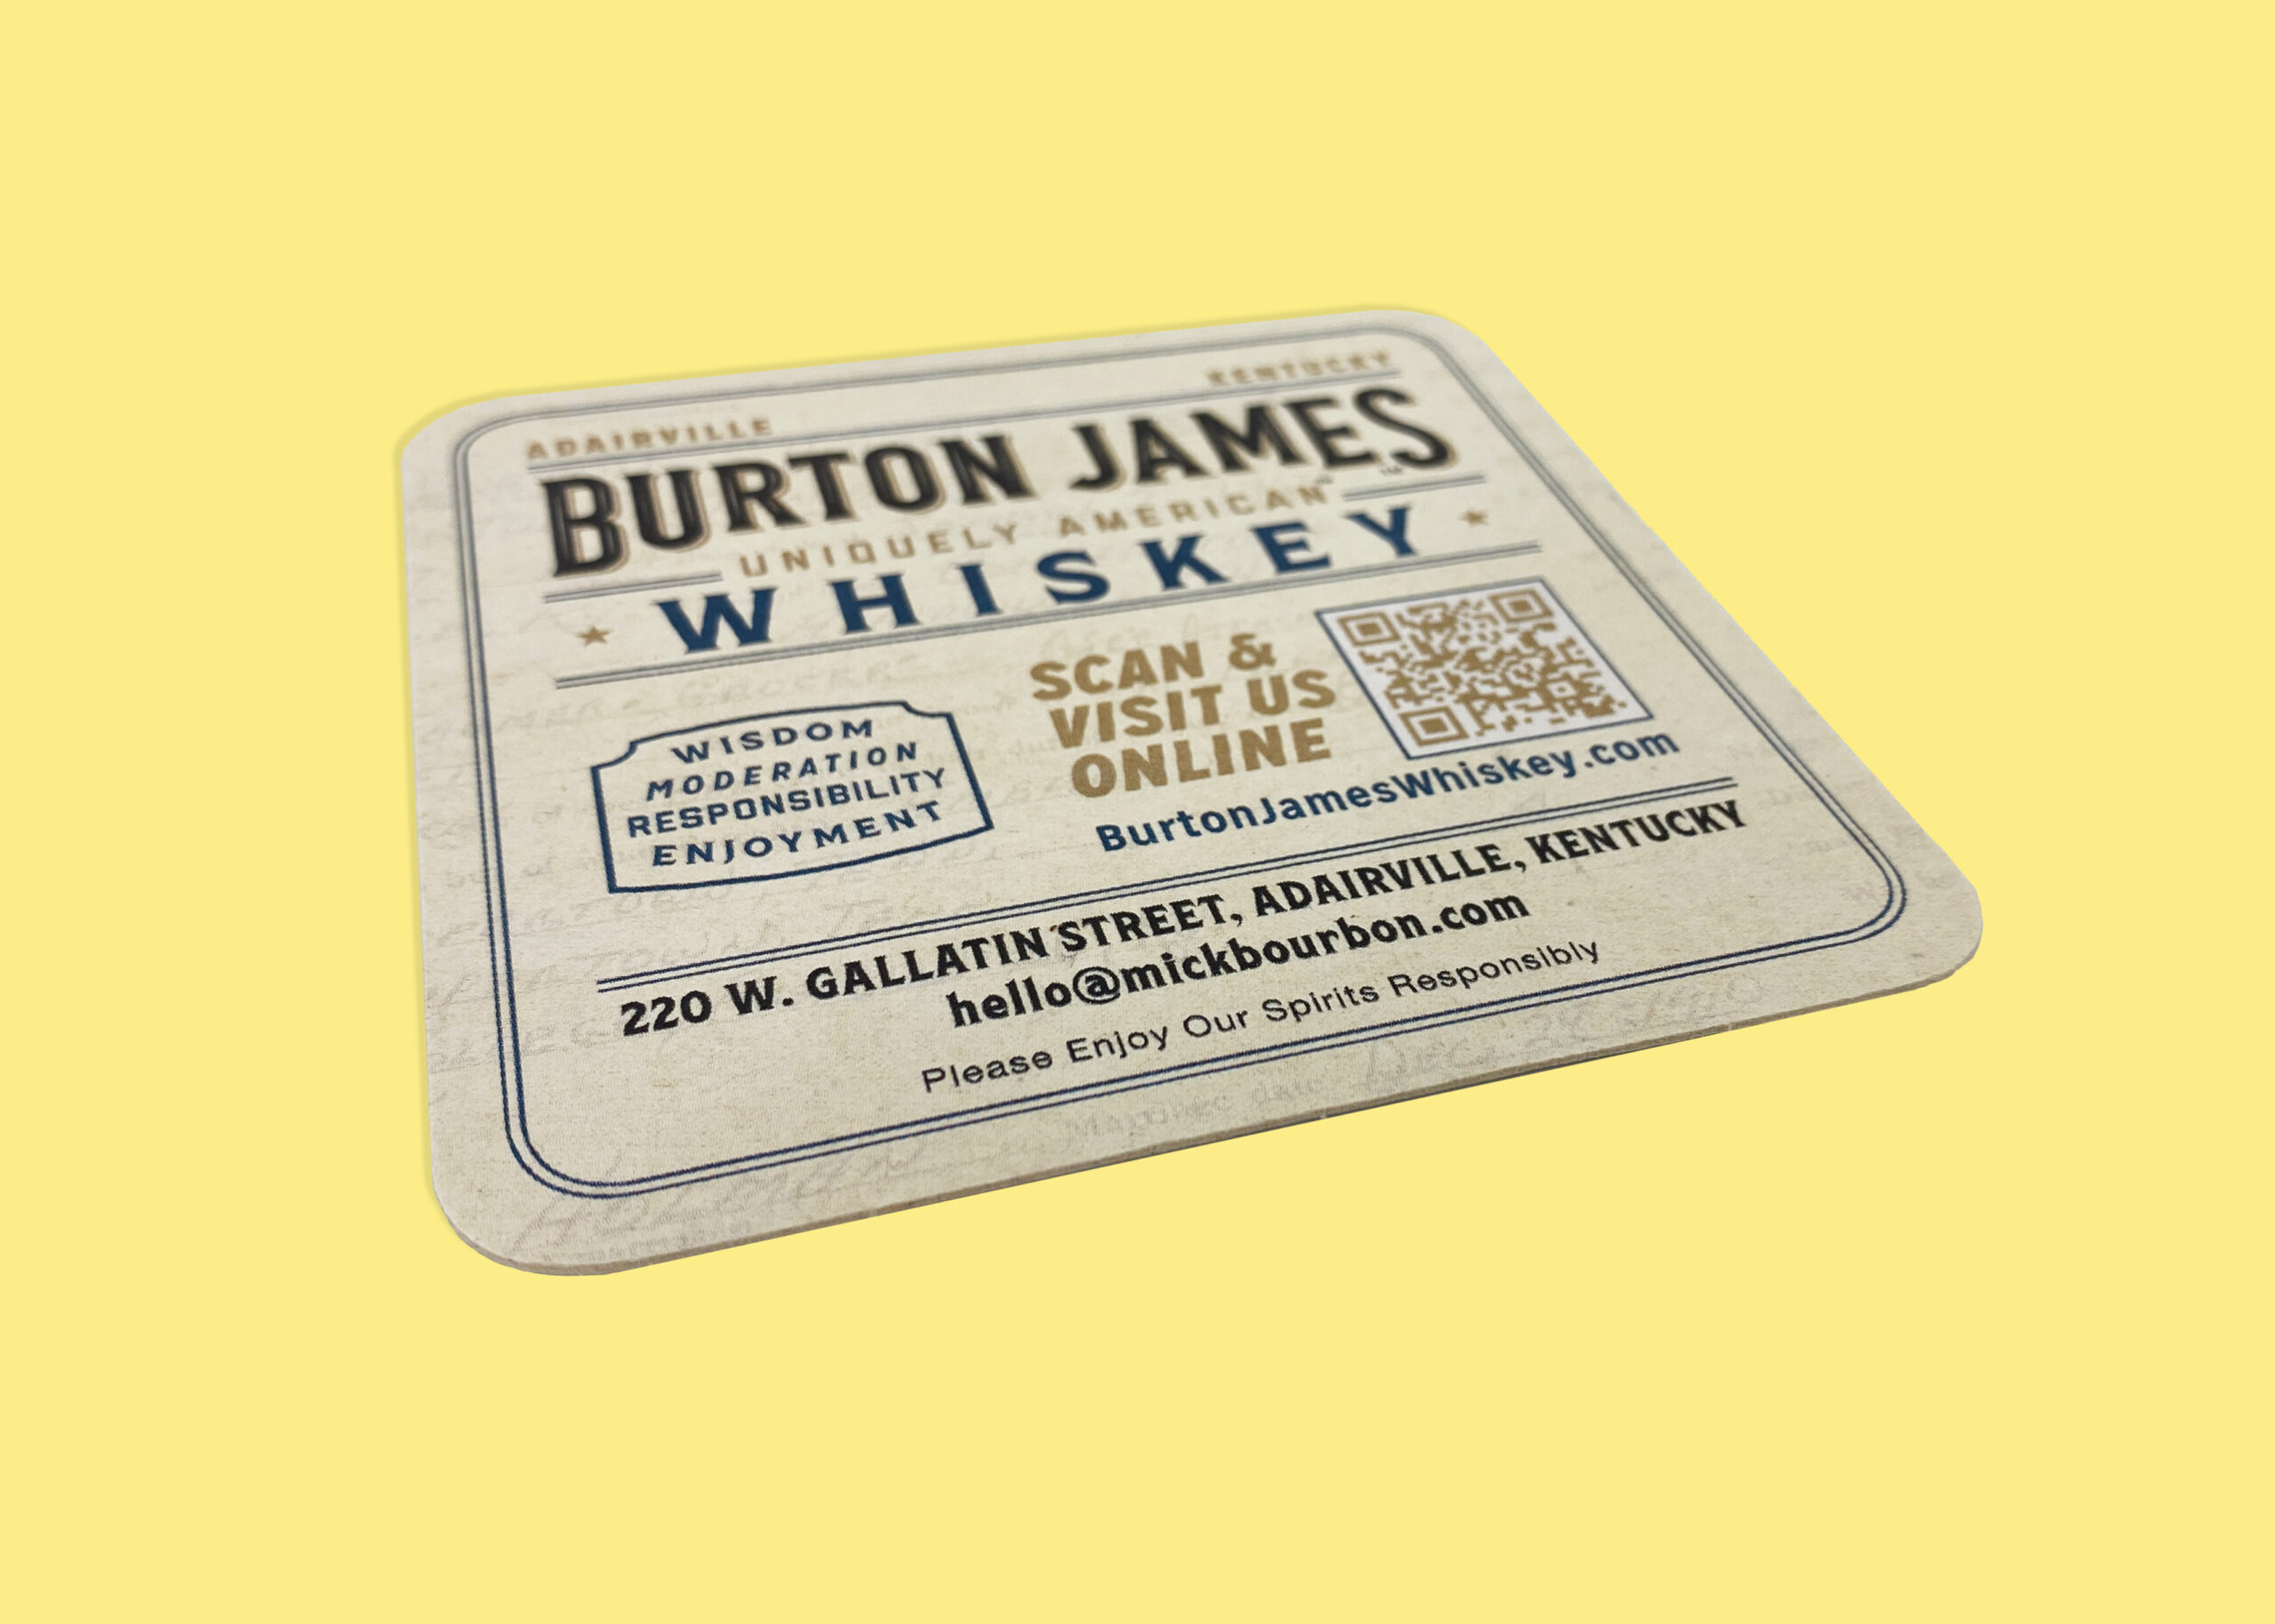 Burton James WhiskeyCoasters